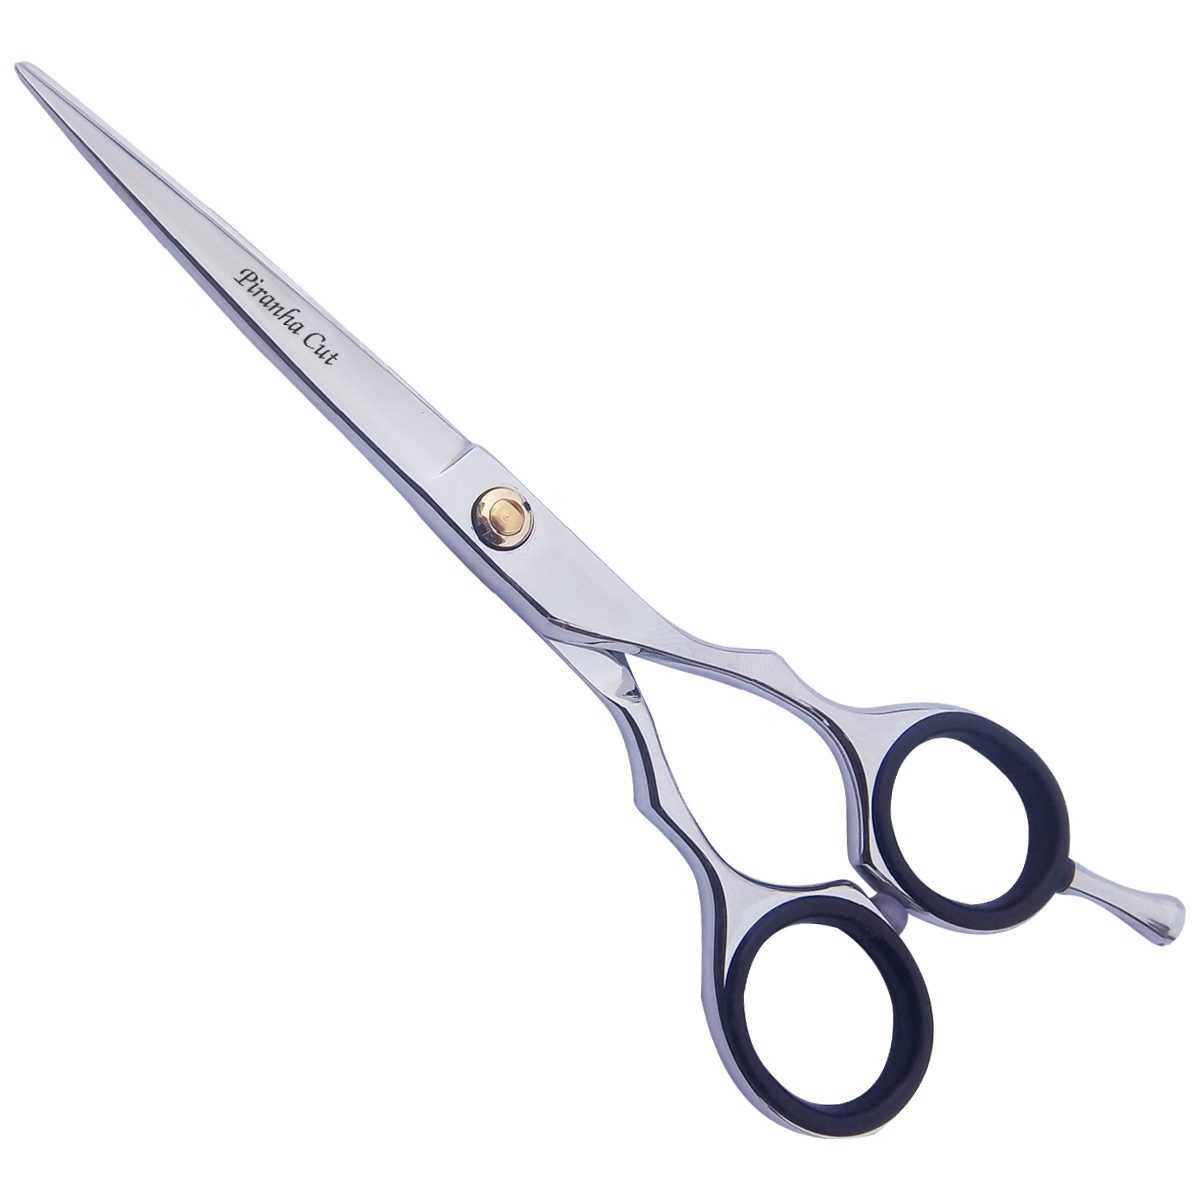 Razor Edge Barber Scissors